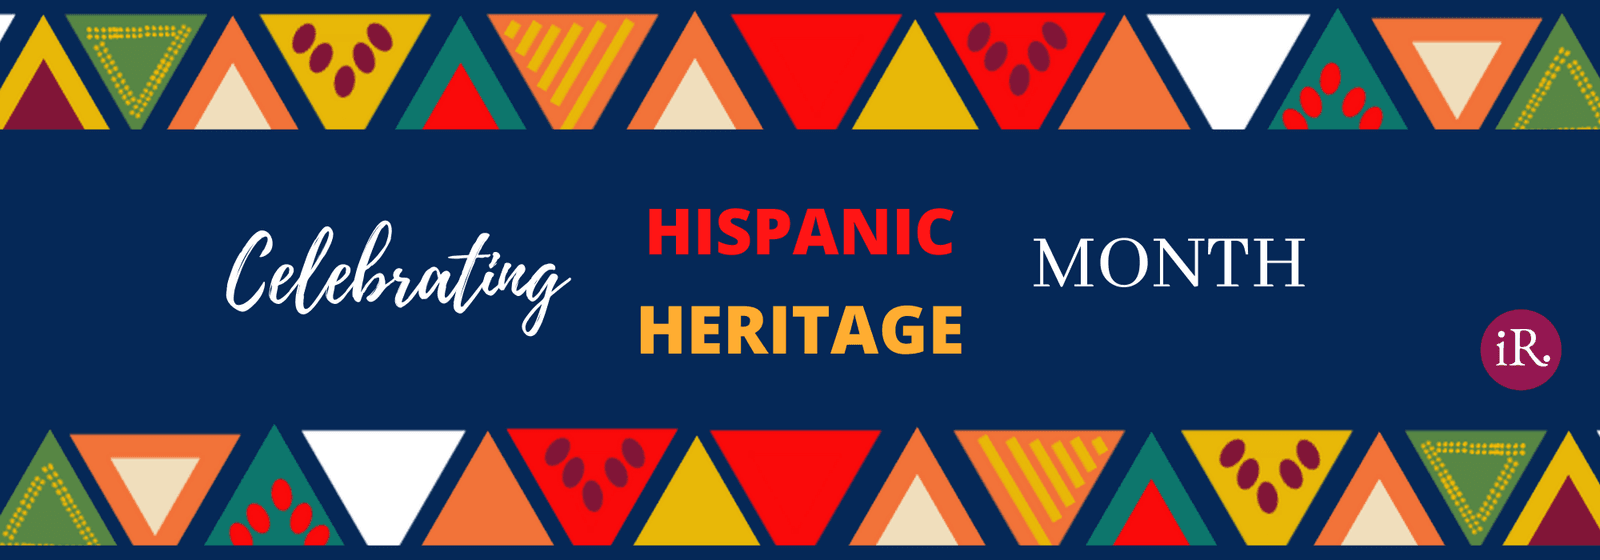 Blue Red Orange Hispanic Heritage Month Banner Image 2000 x 700 px